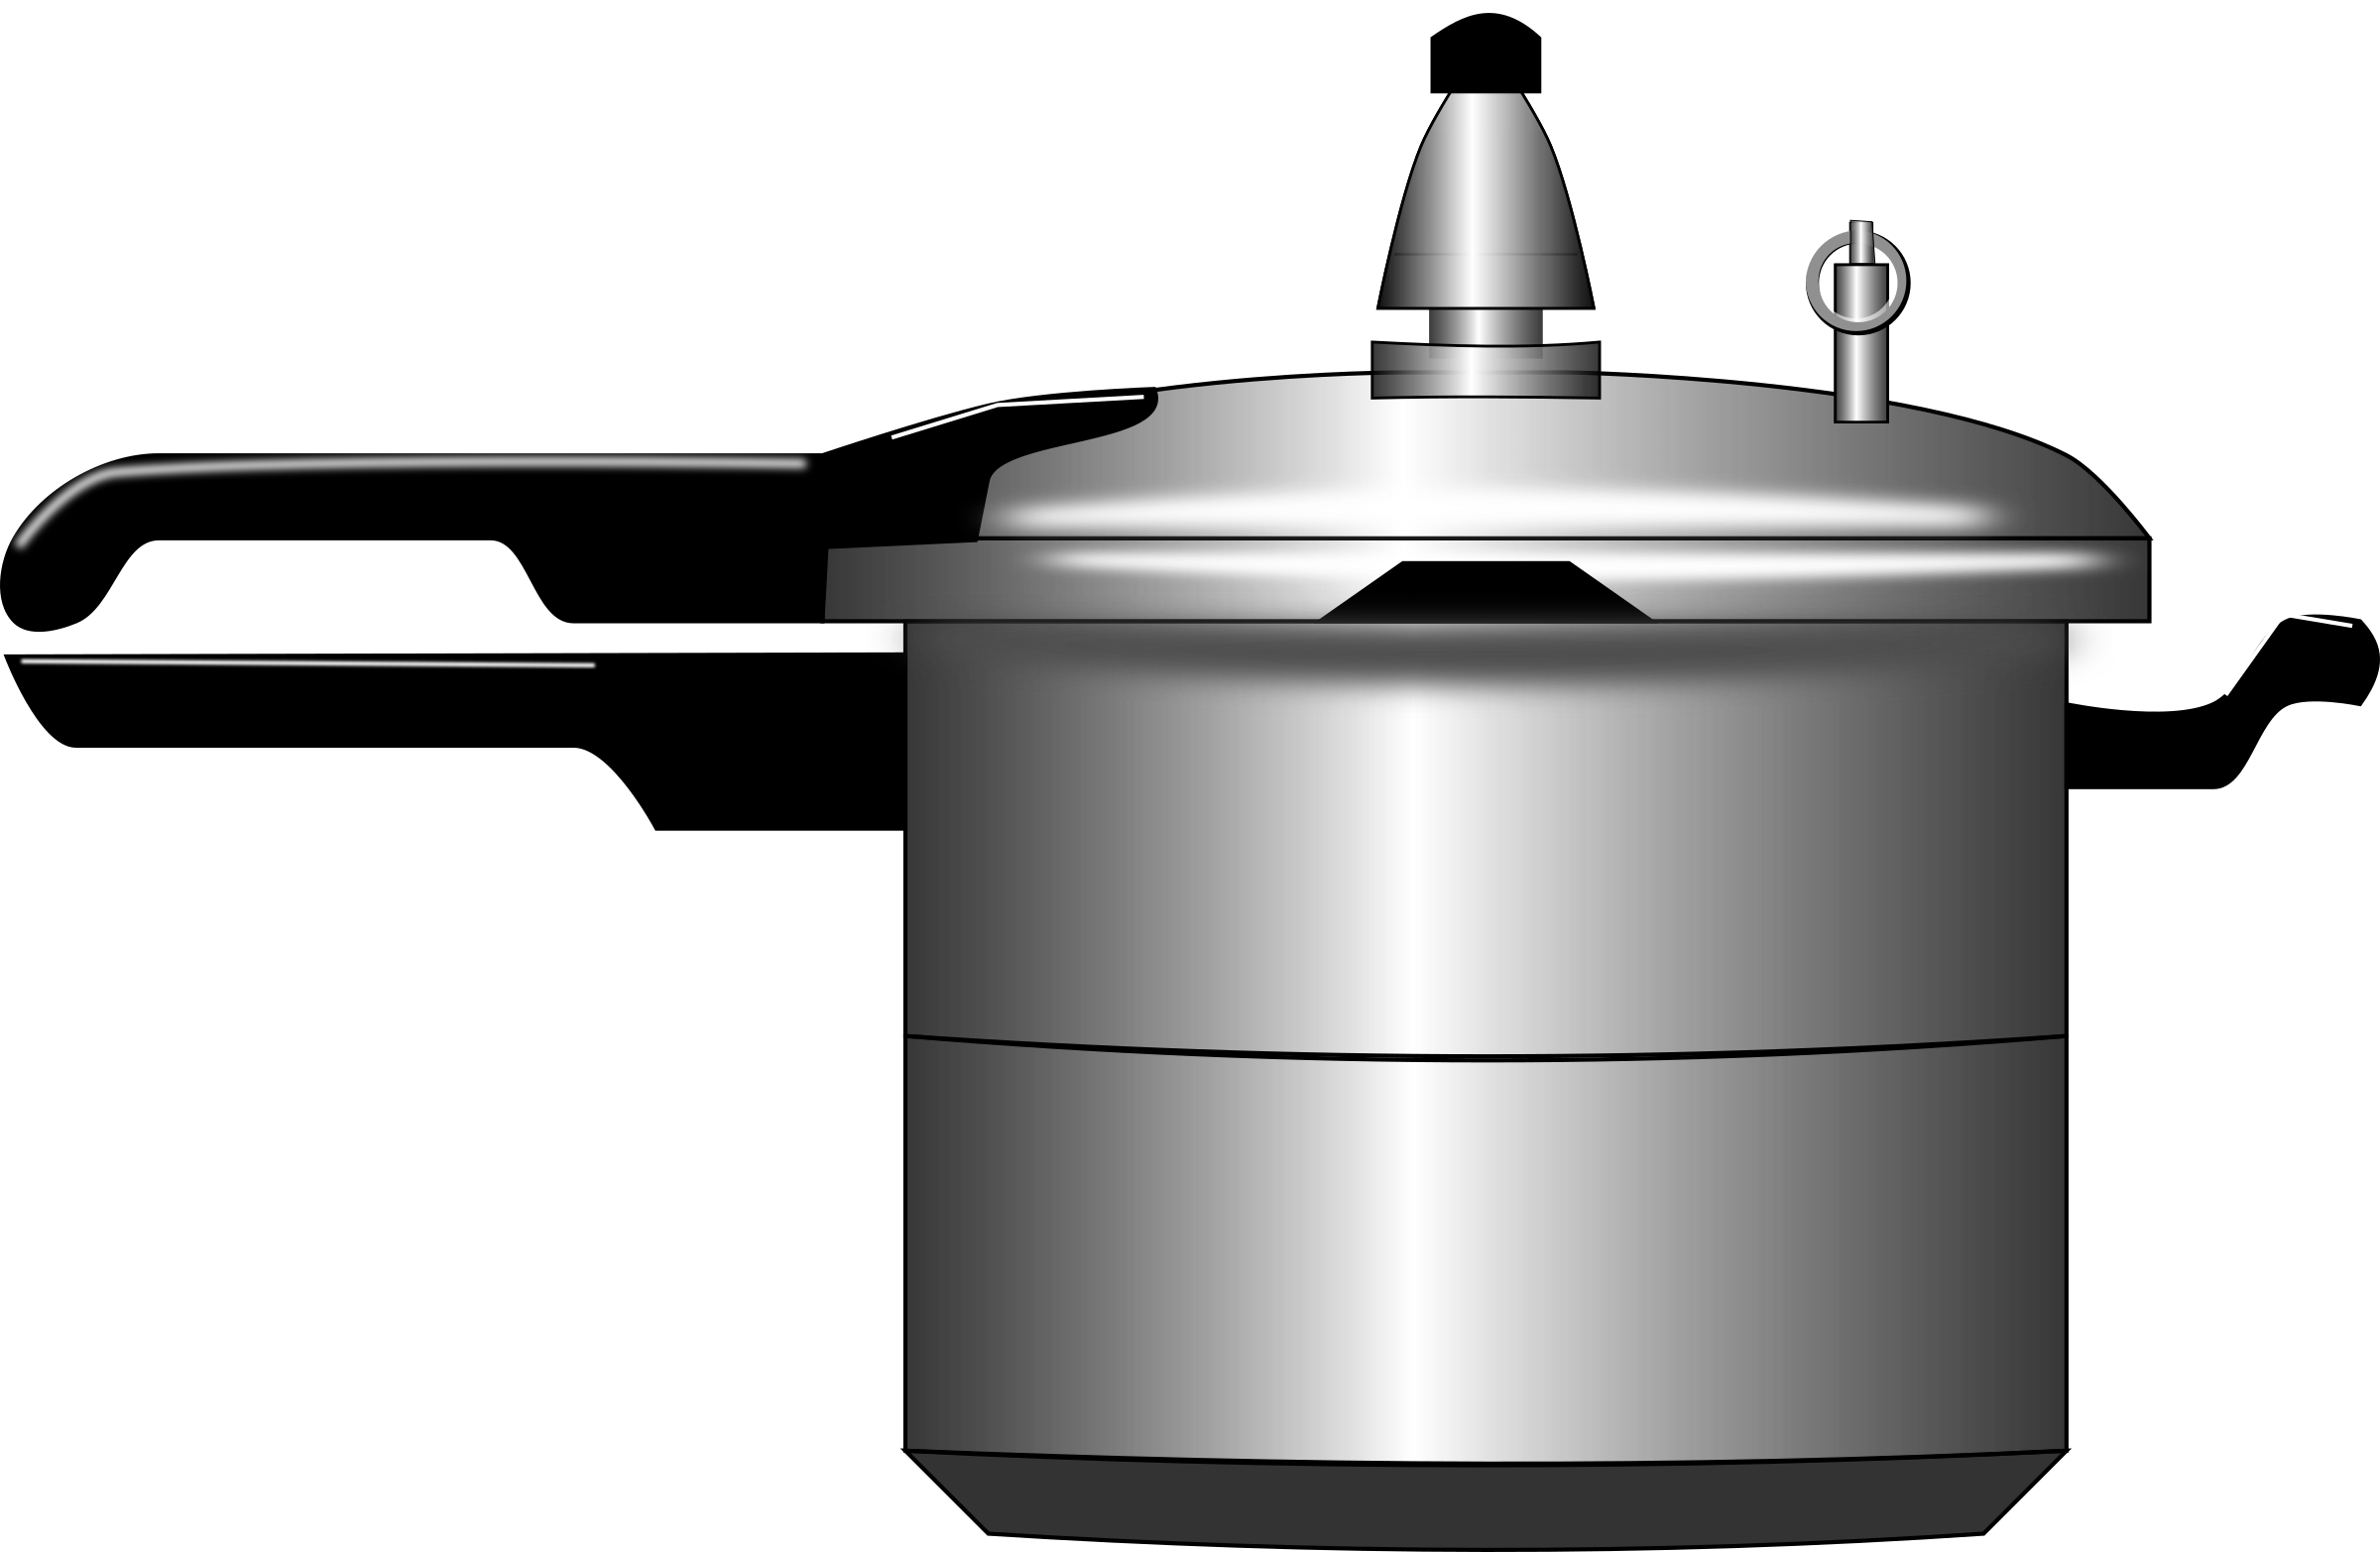 Pressure cooker clipart - Clipground